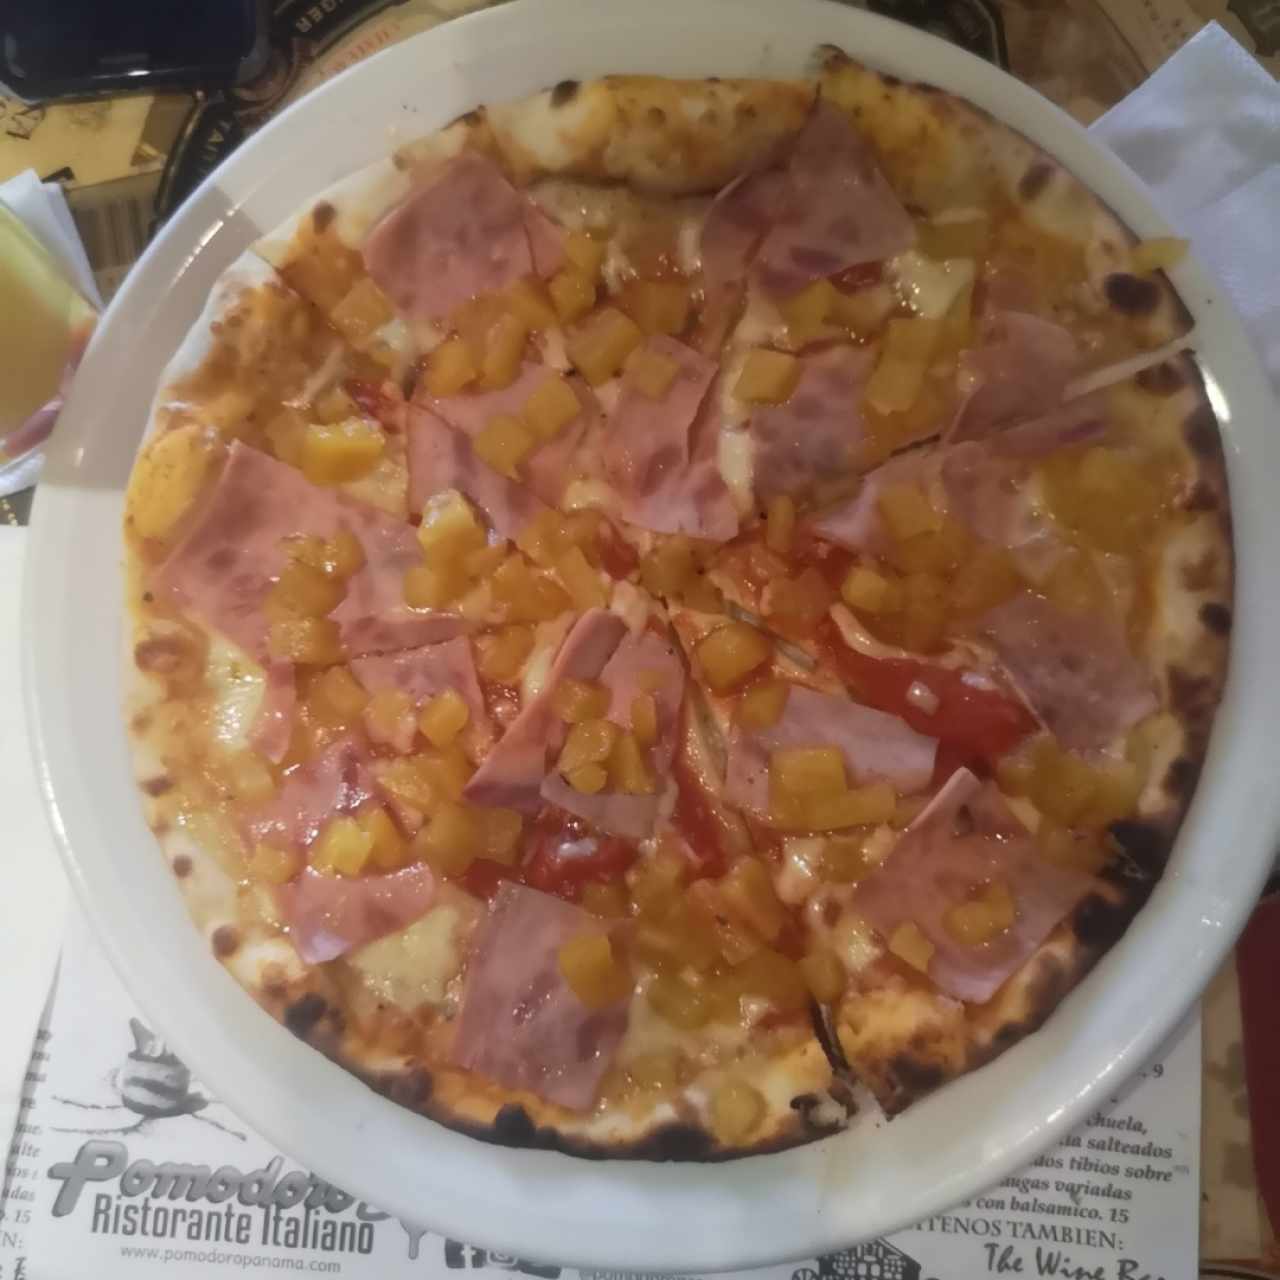  pizza de jamón y piña